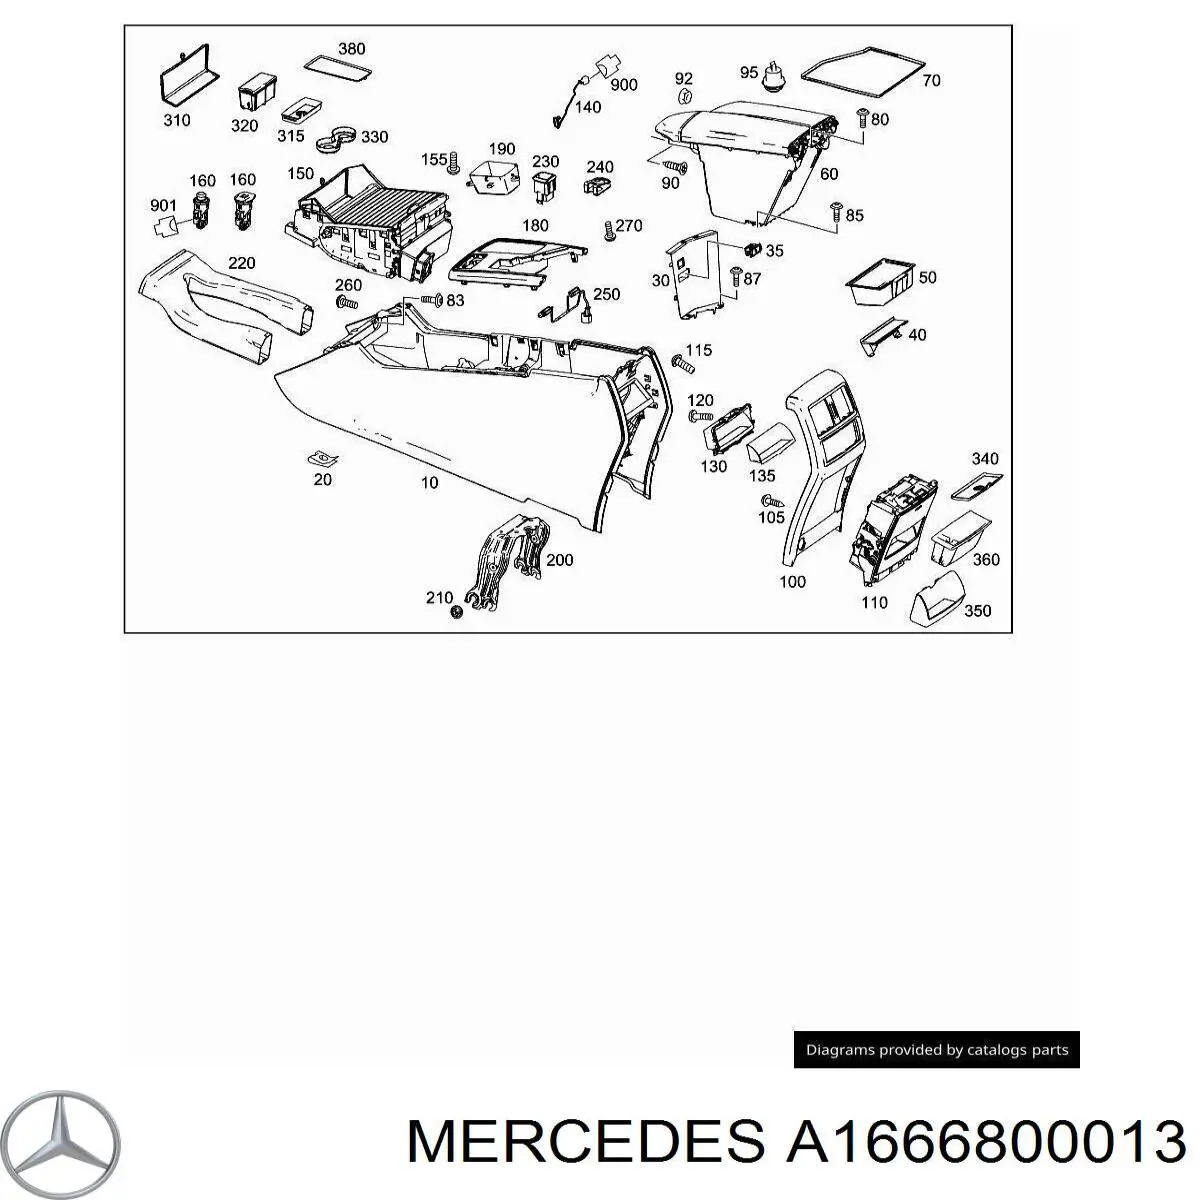 A1666800013 Mercedes